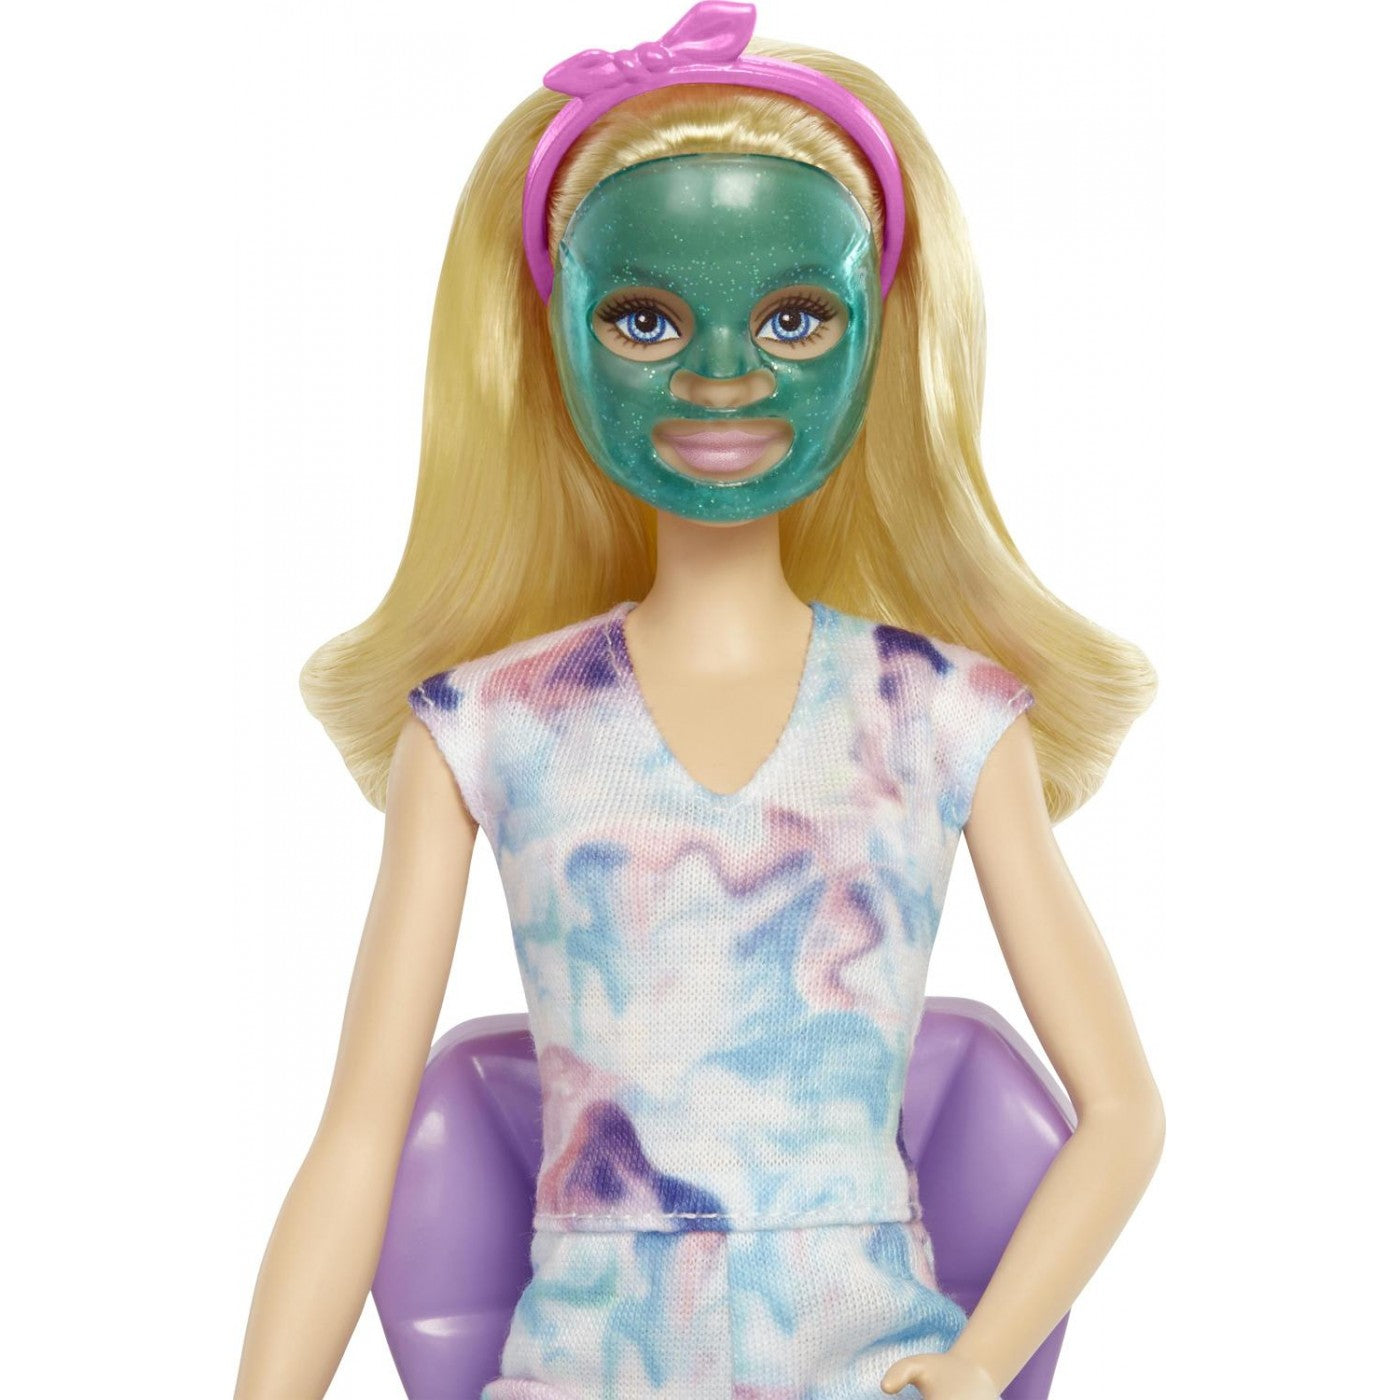 Barbie Sparkle Mask Spa Day Playset